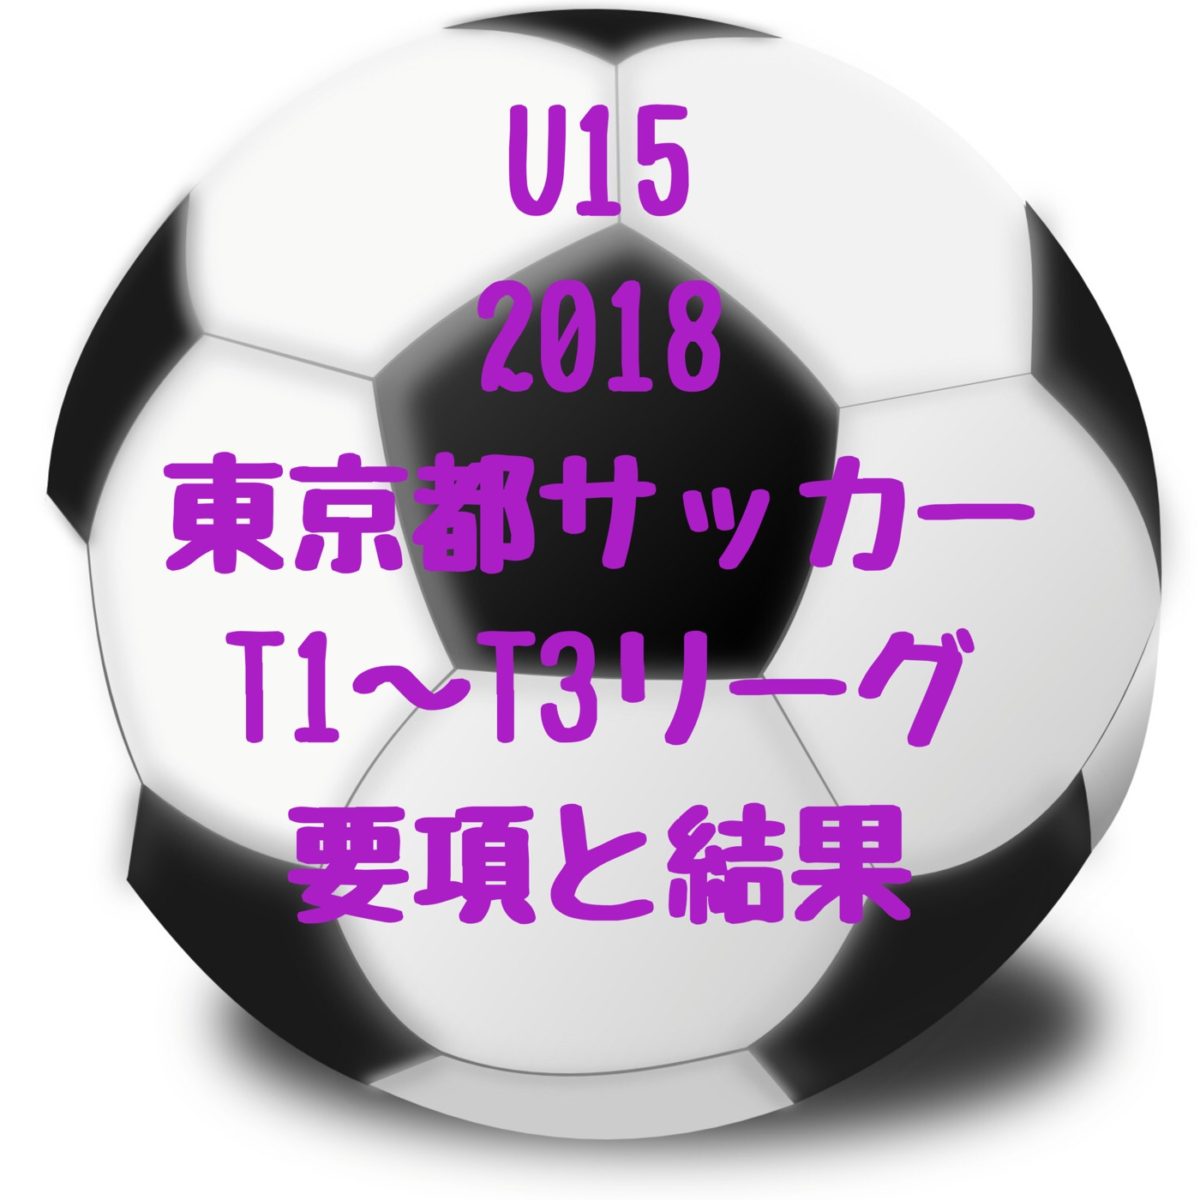 U15 Tリーグサッカー18 東京都 T1 T3リーグ 最終順位